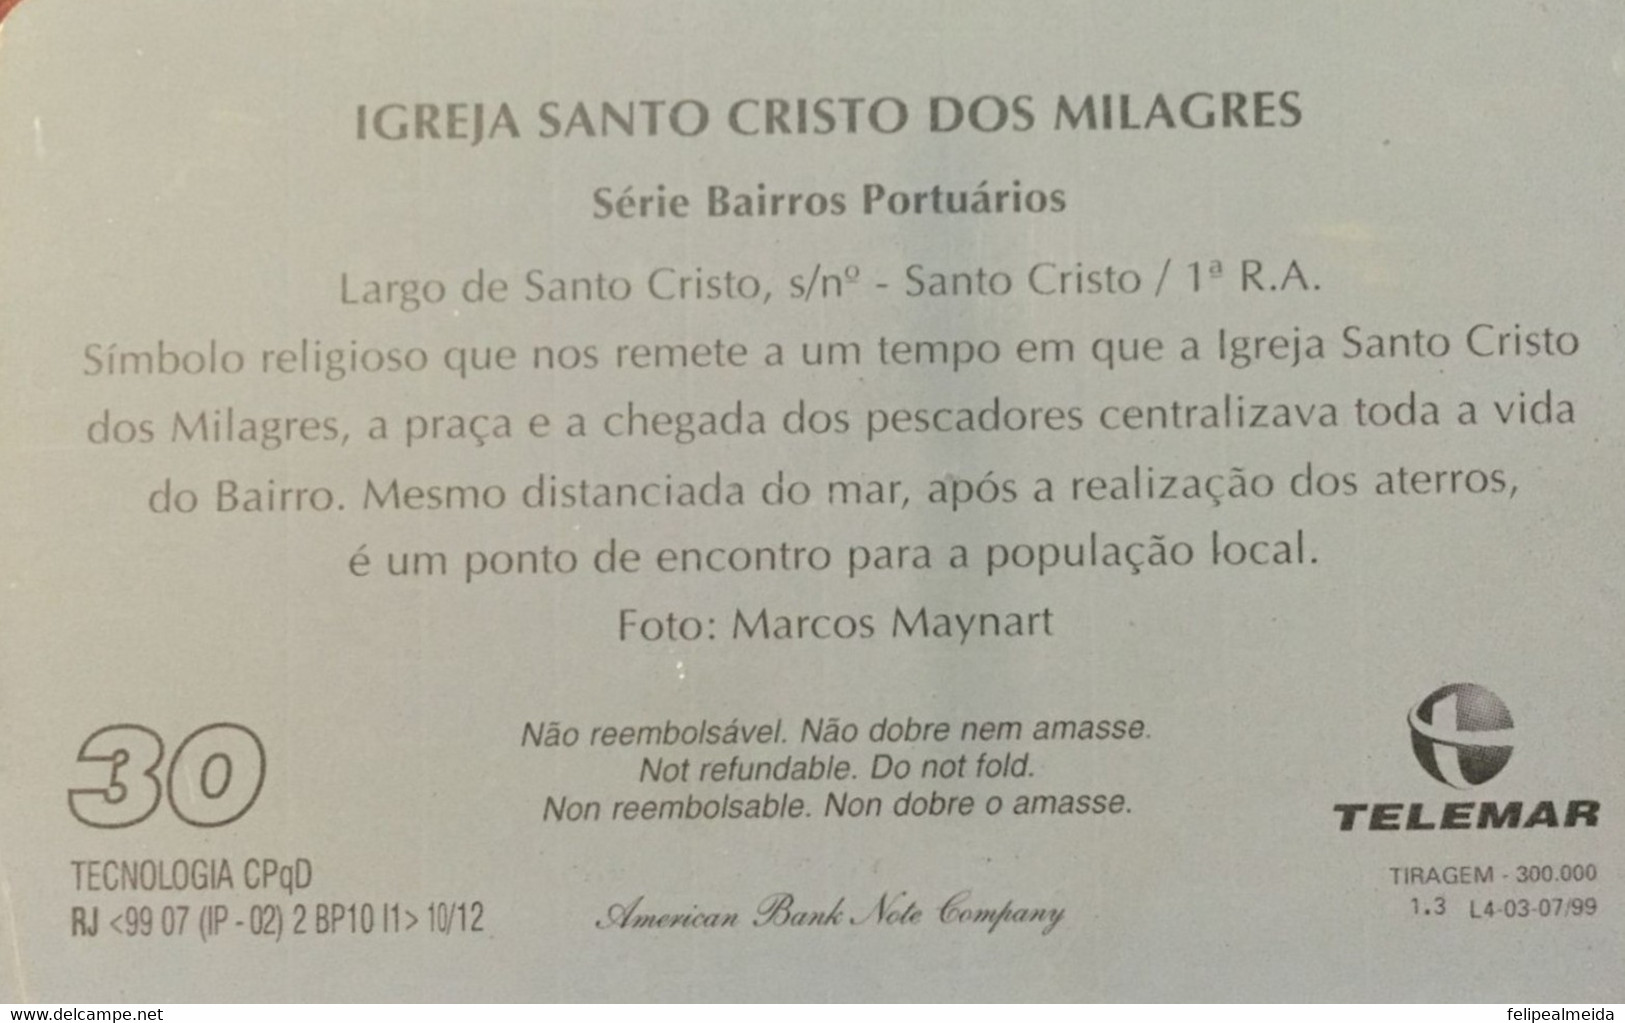 Phone Card Produced By Telemar In 1999 - Bairros Portuários Series - Santo Cristo Dos Milagres Church - Kultur